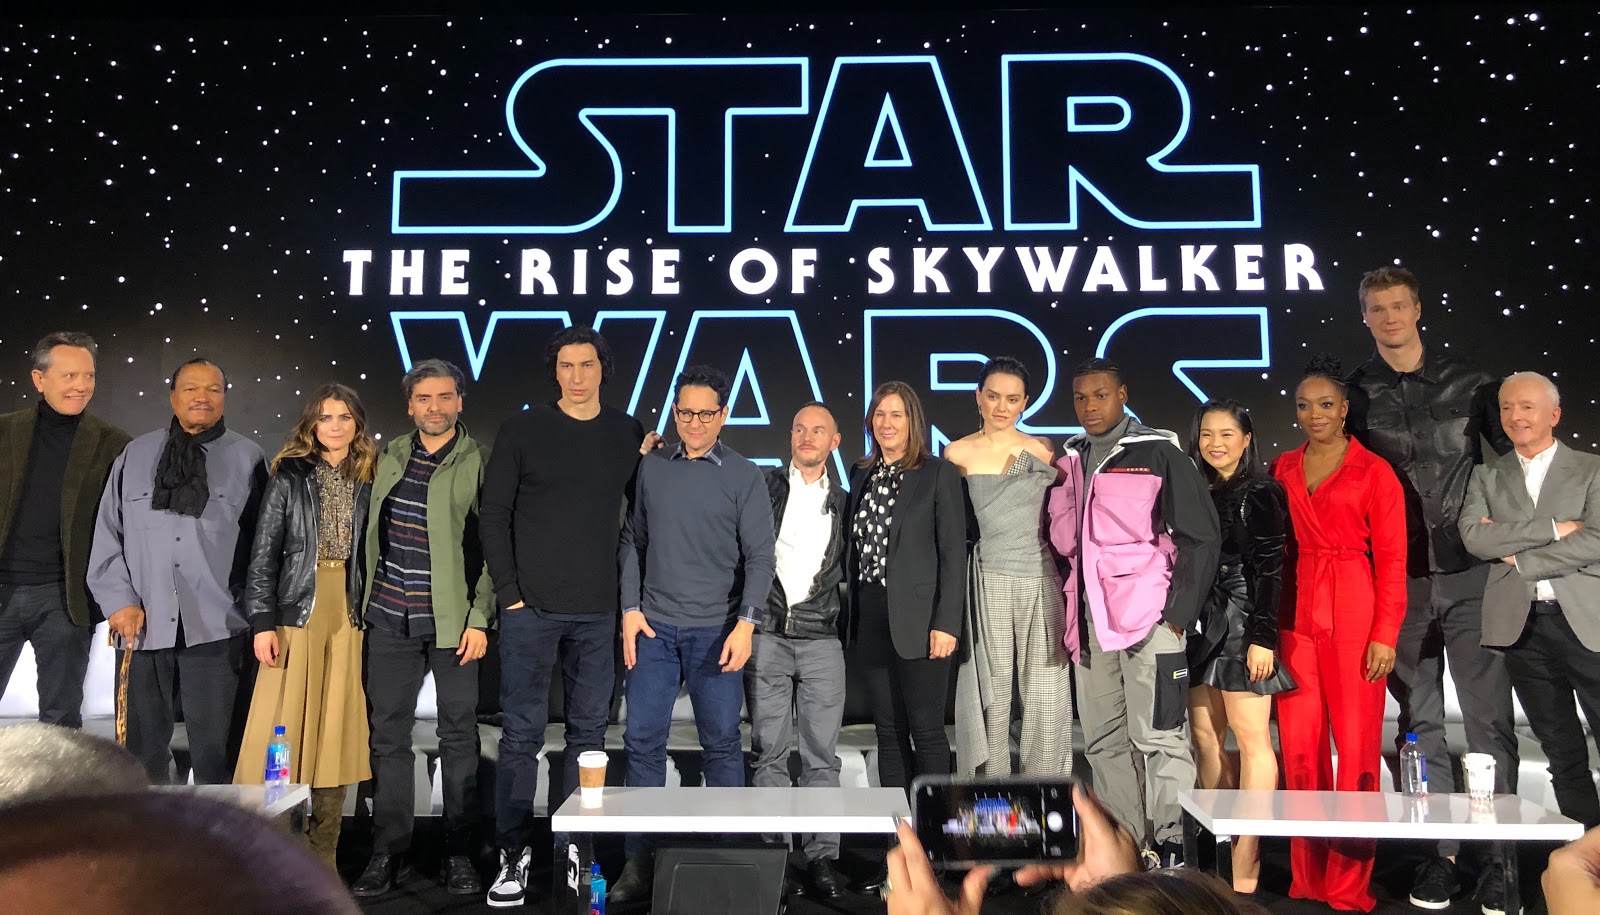 Video - Star Wars: The Rise of Skywalker Cast, Creative Team